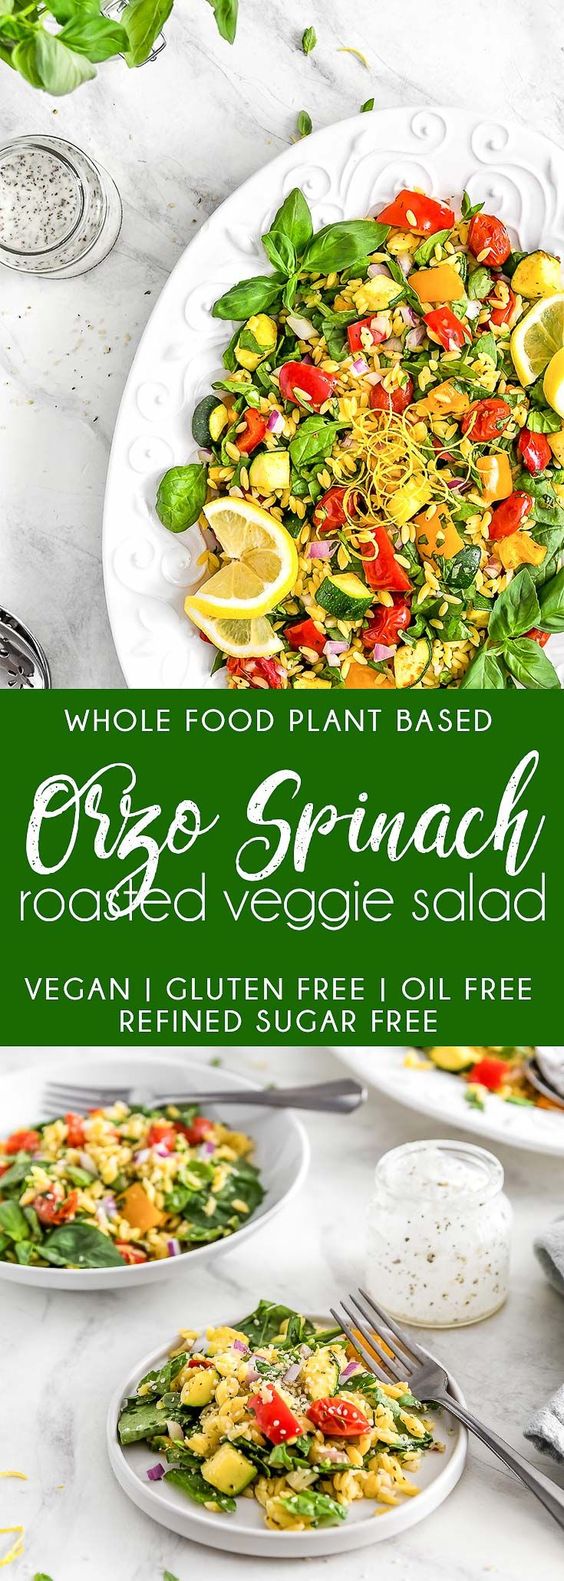 AMAZING Orzo Spinach Roasted Veggie Salad! Simple, healthy, and delicious veggie packed salad! #wholefoodplantbased #vegan #glutenfree #oilfree #pastasalad #plantbasedrecipes #veganrecipes #plantbased #refinedsugarfree #healthy #healthyvegan #monkeyandmekitchenadventures #recipe